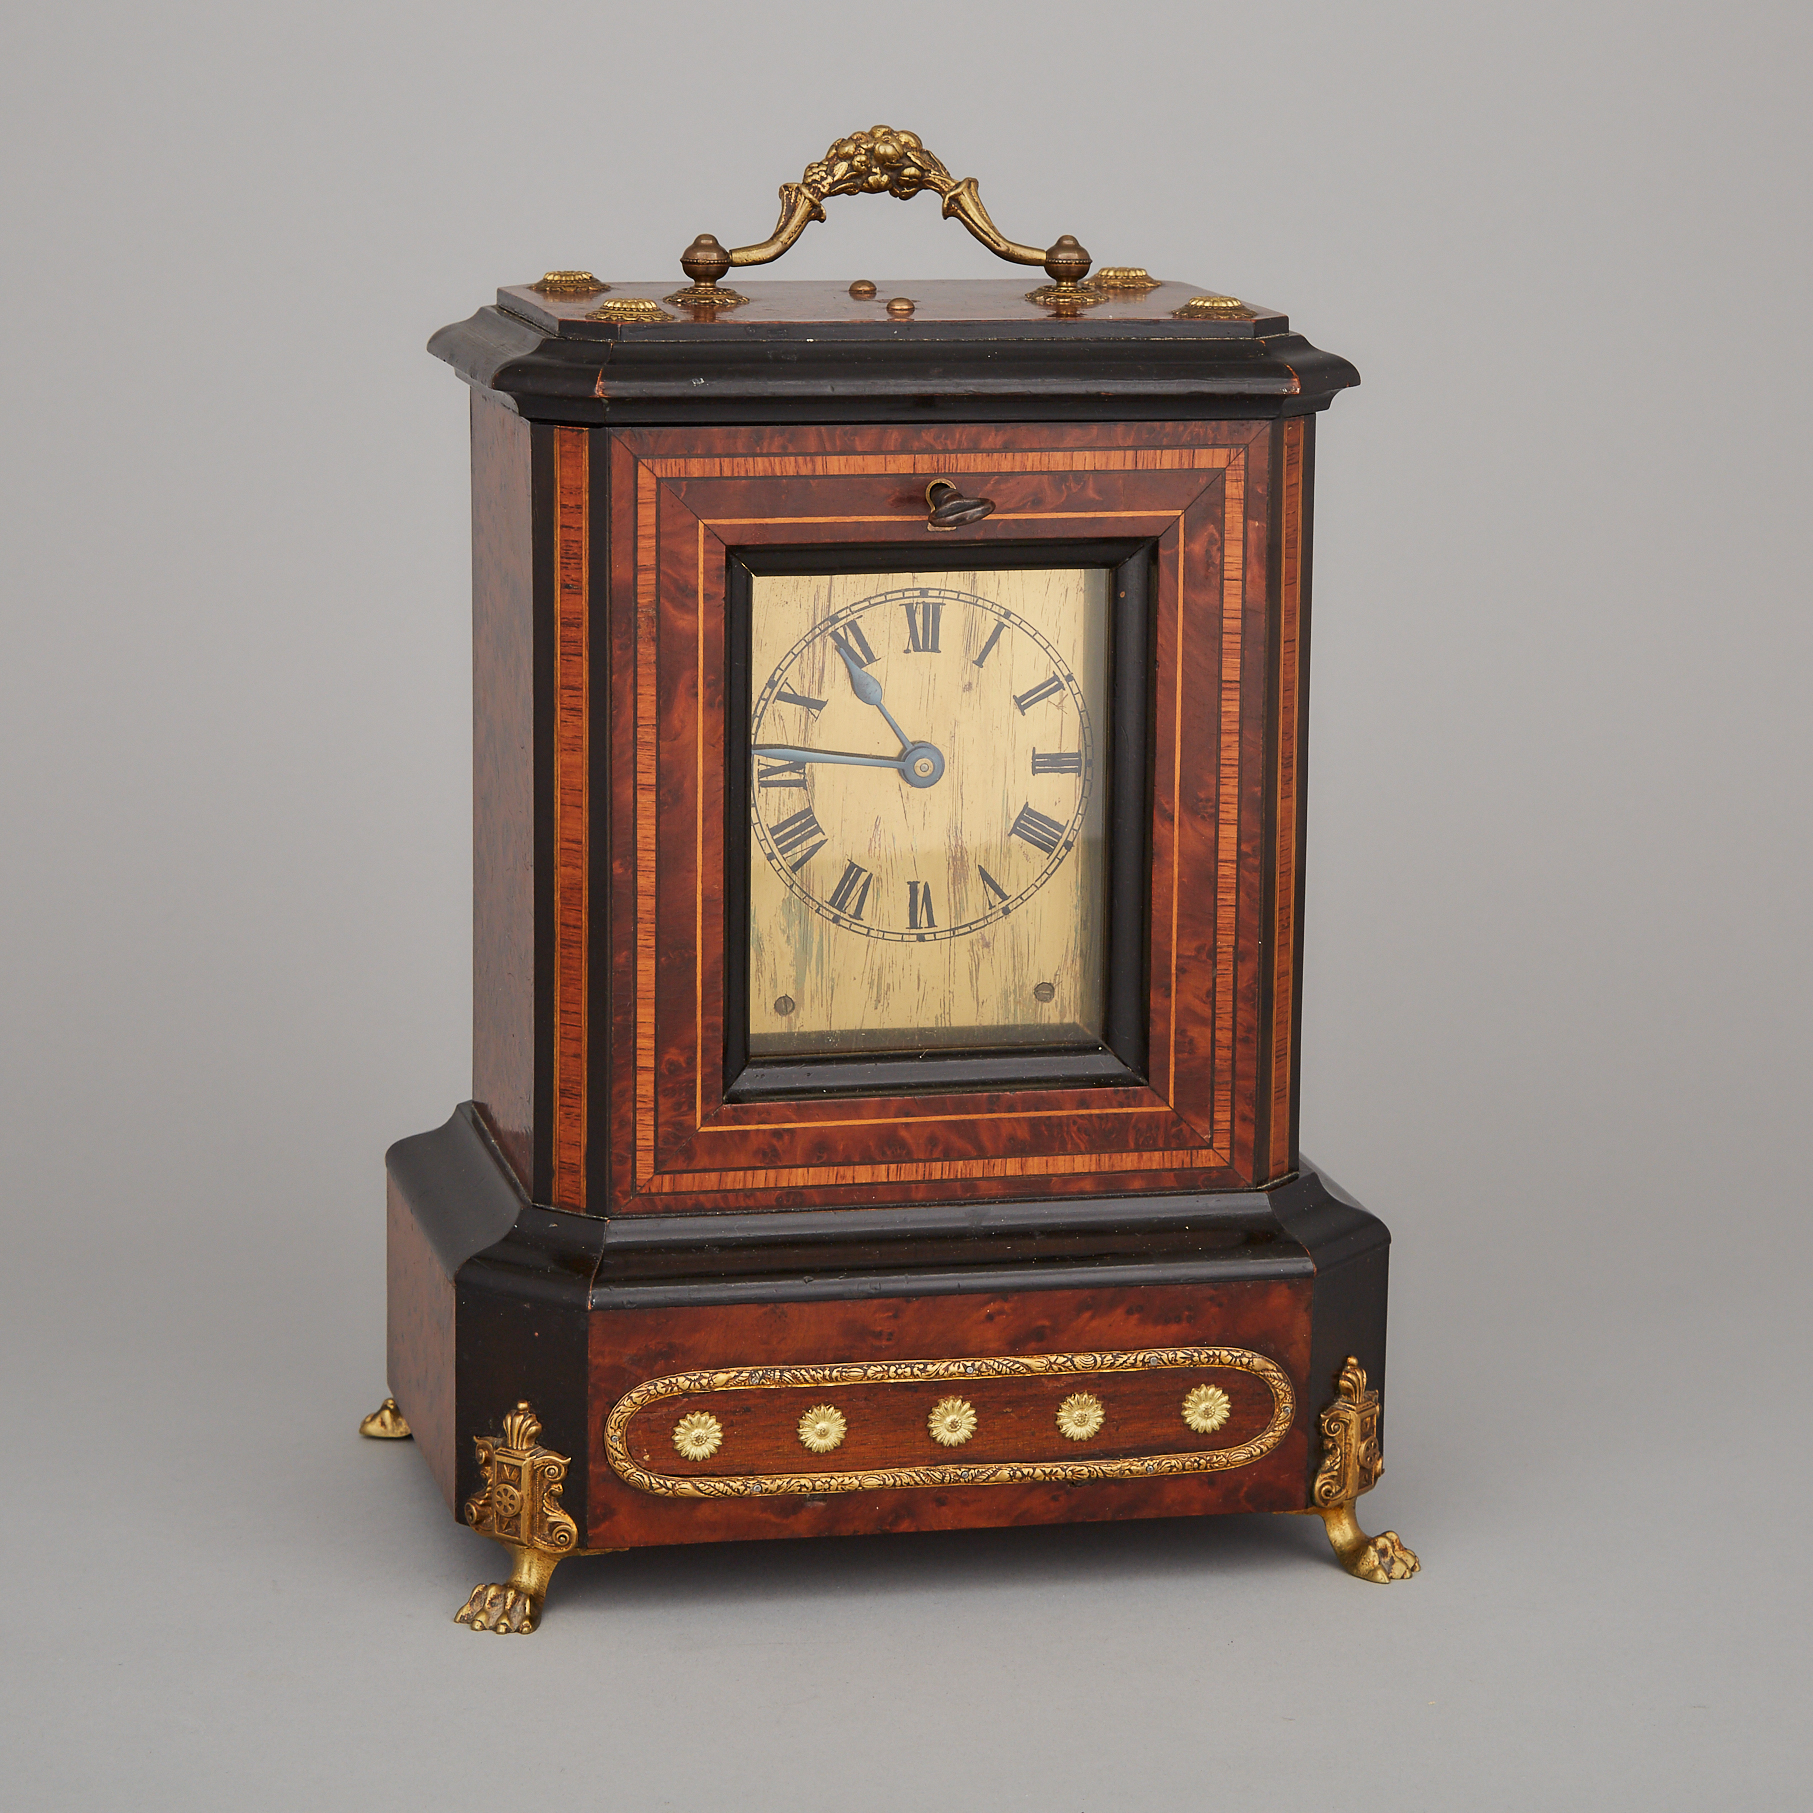 Napoleon III  Kingwood Banded Burl Walnut and Ebonized Table Clock, Duverdry & Bloquel, Paris, c.1900